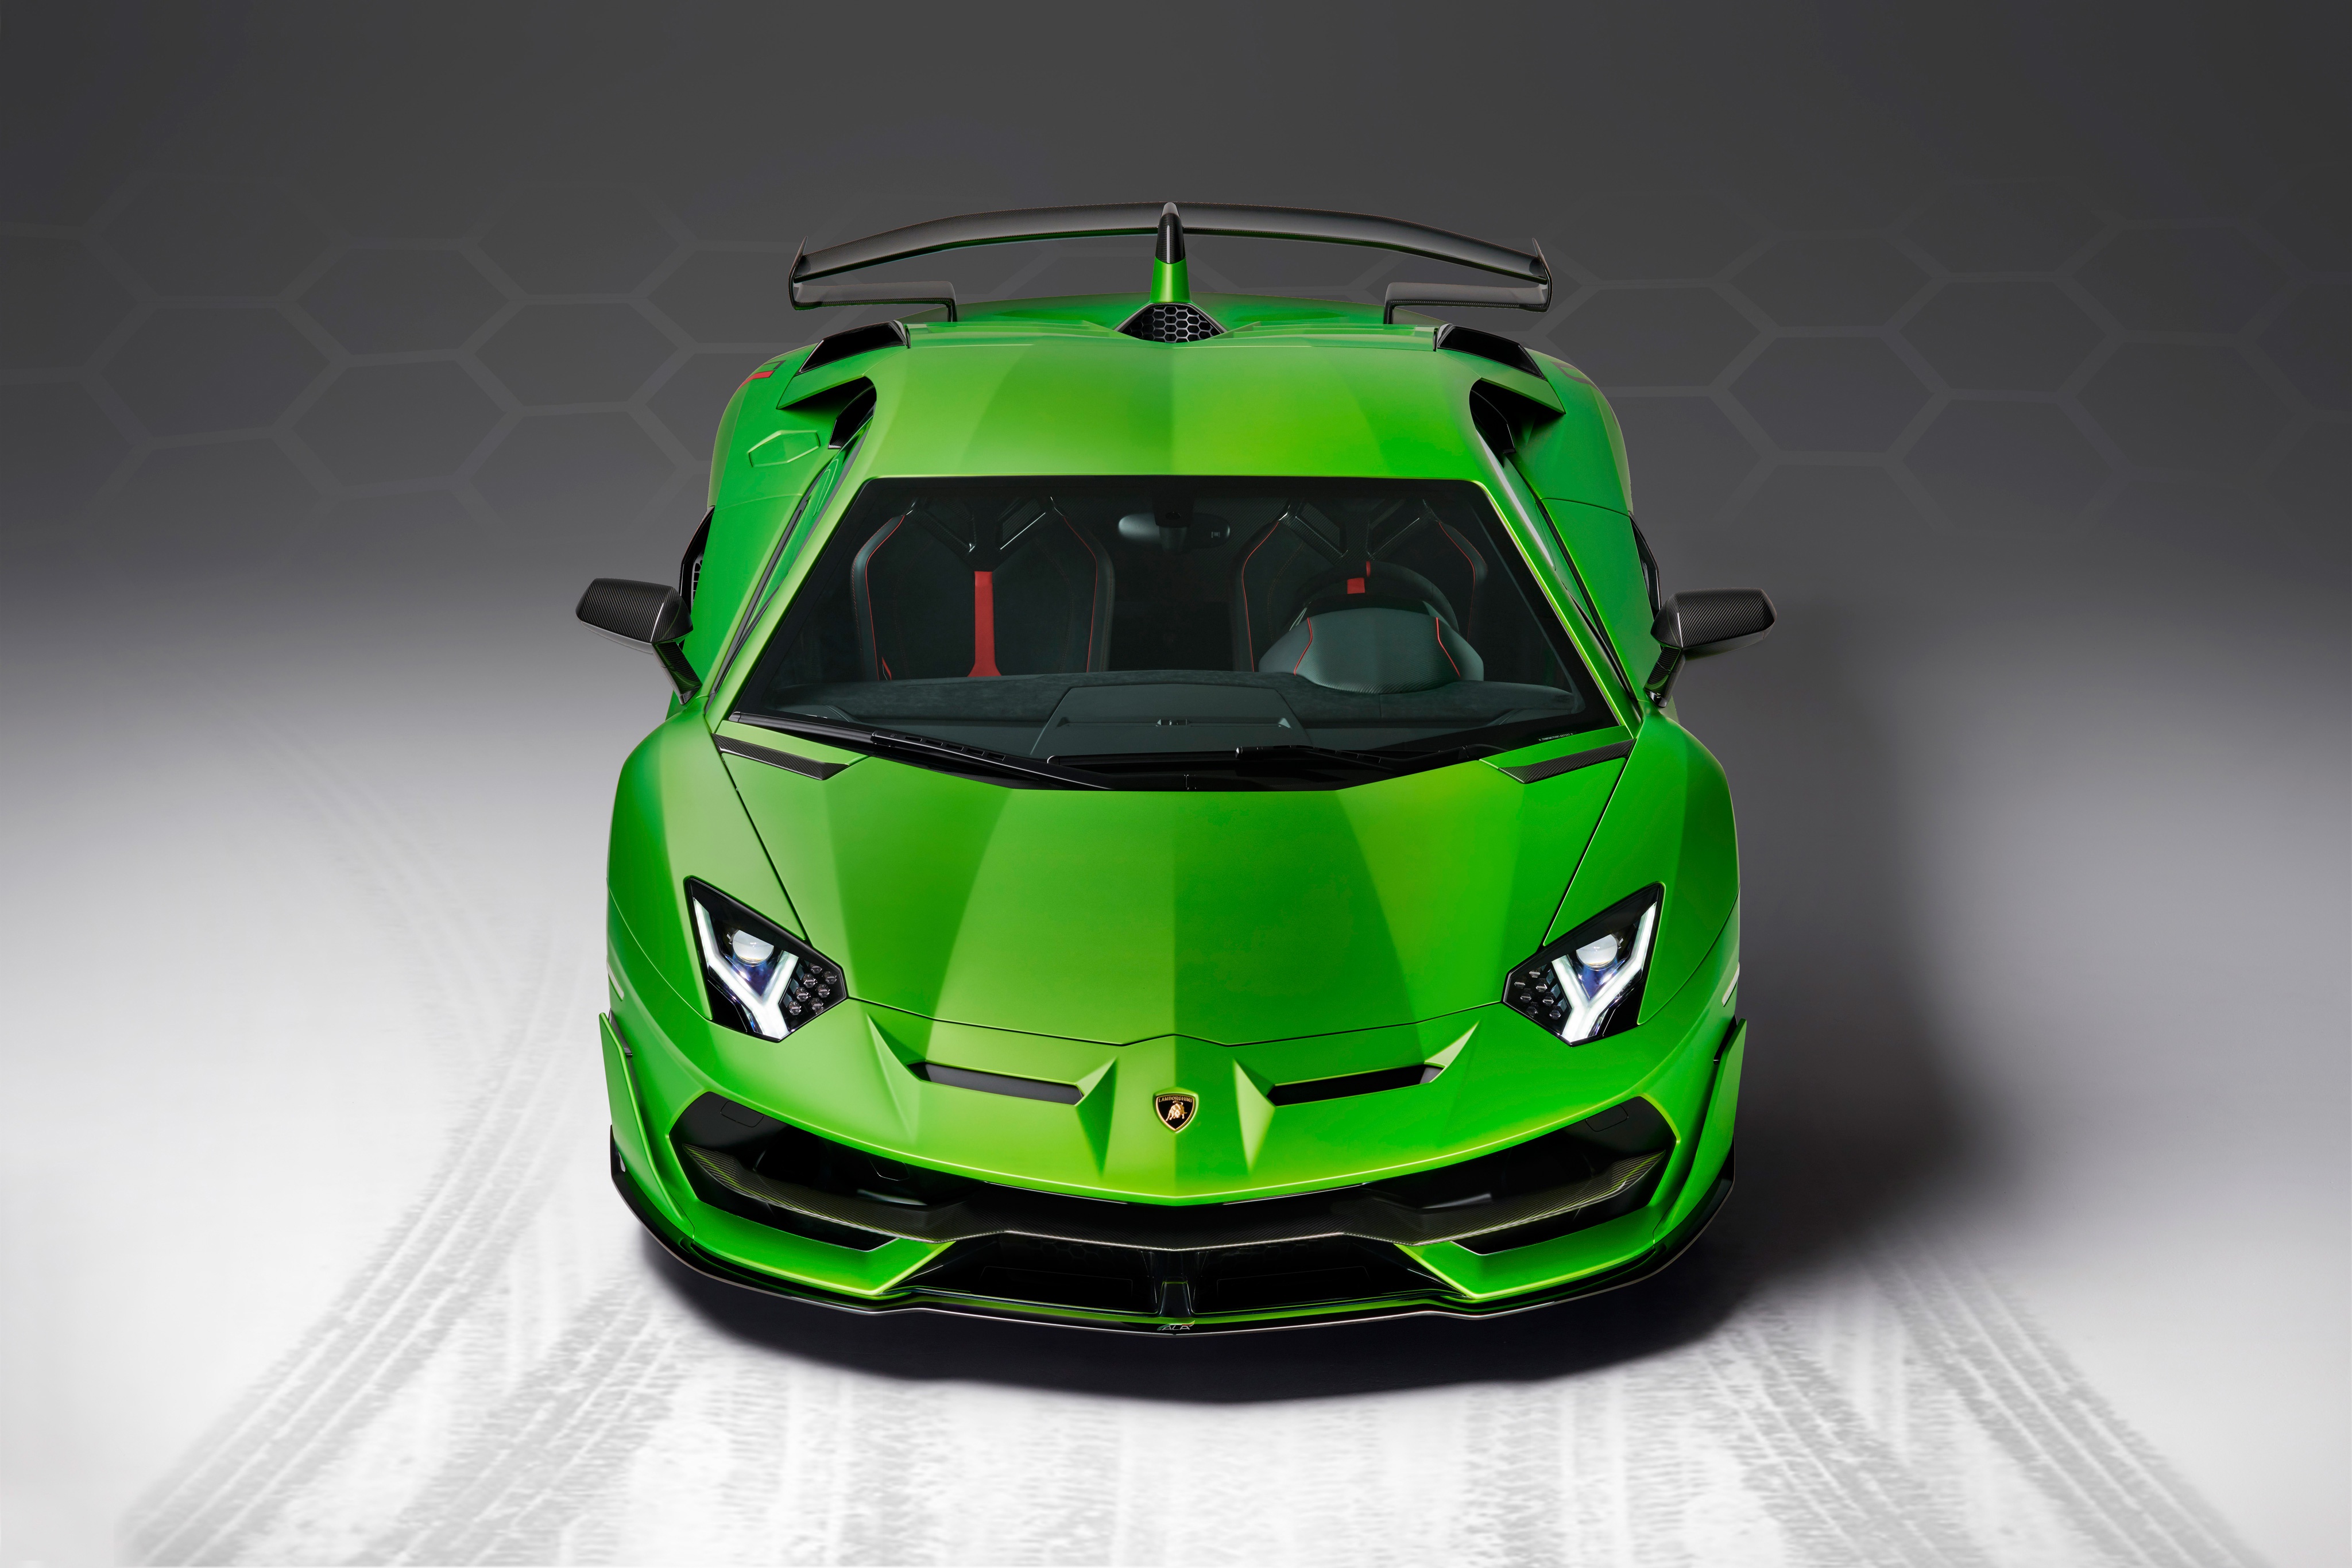 Lamborghini Aventador SVJ 4k Ultra HD Wallpaper. Background Image